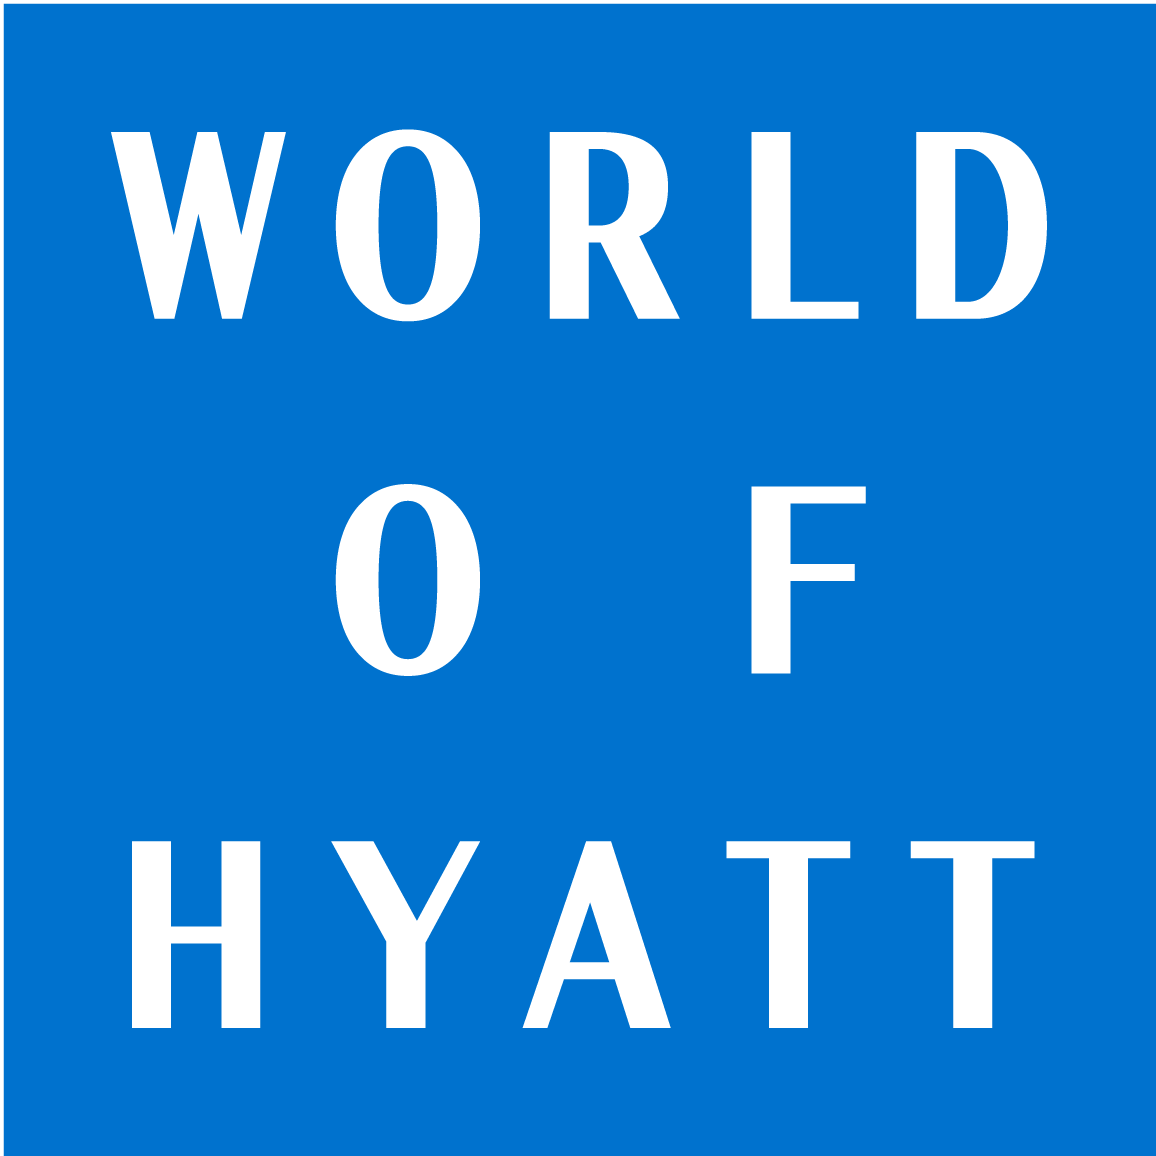 First Park Hyatt in Indonesia to open in Jakarta